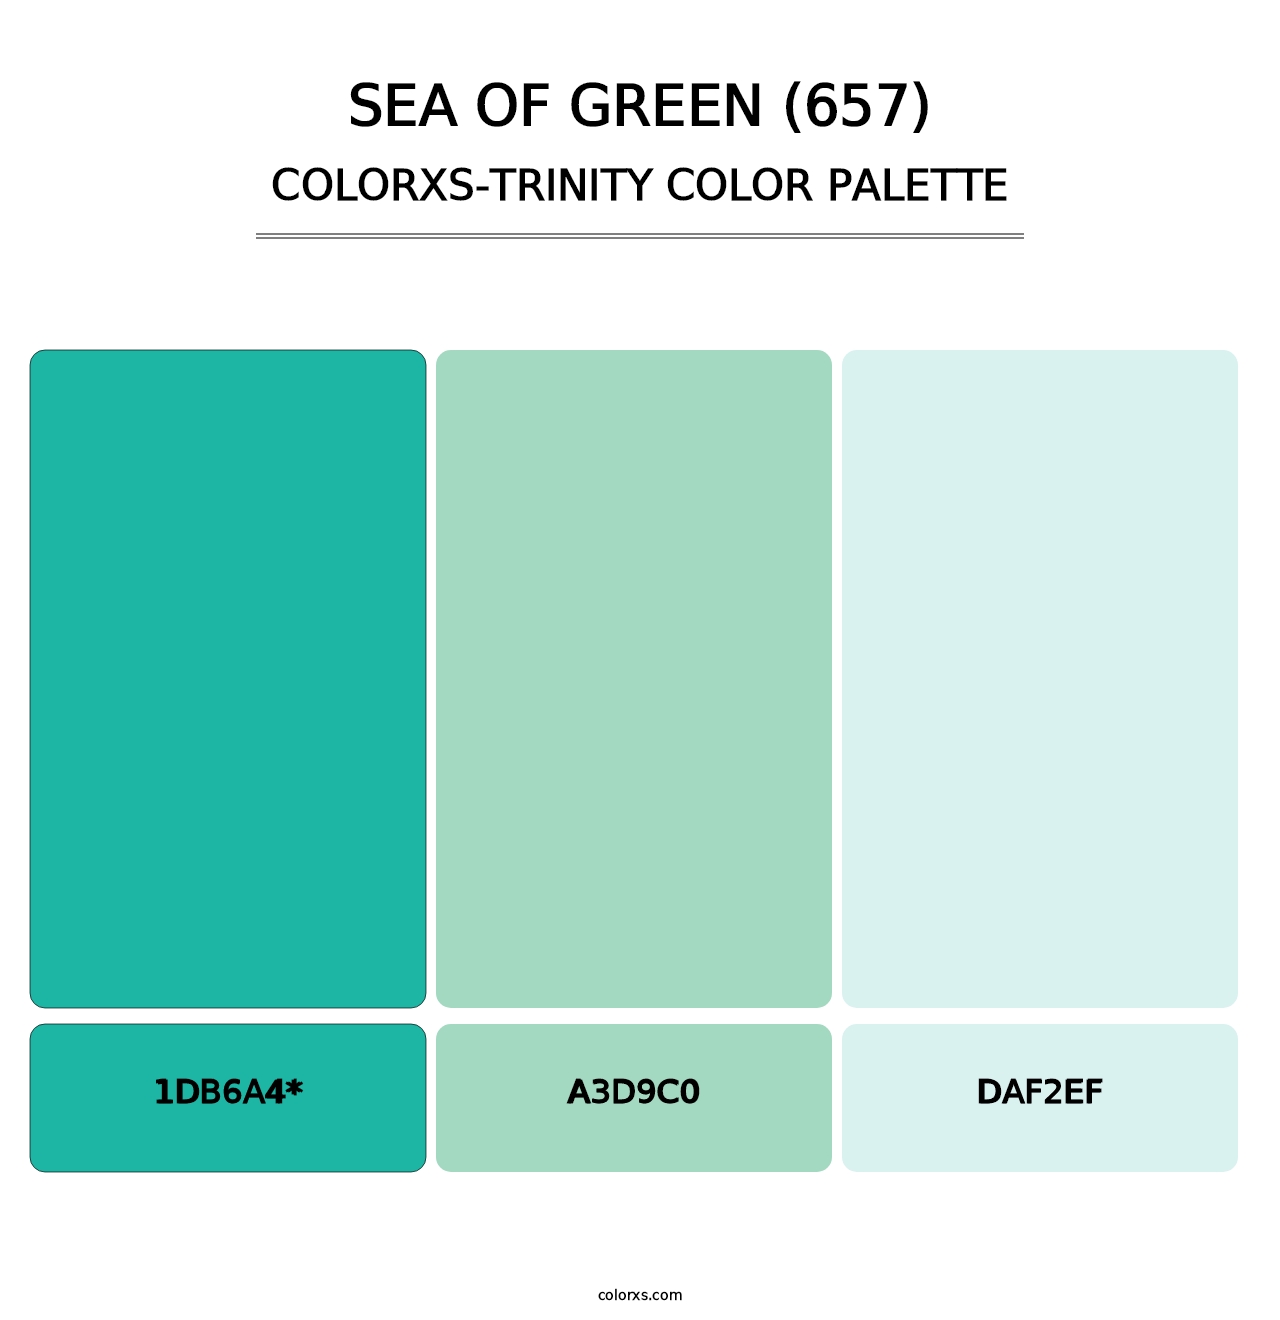 Sea of Green (657) - Colorxs Trinity Palette